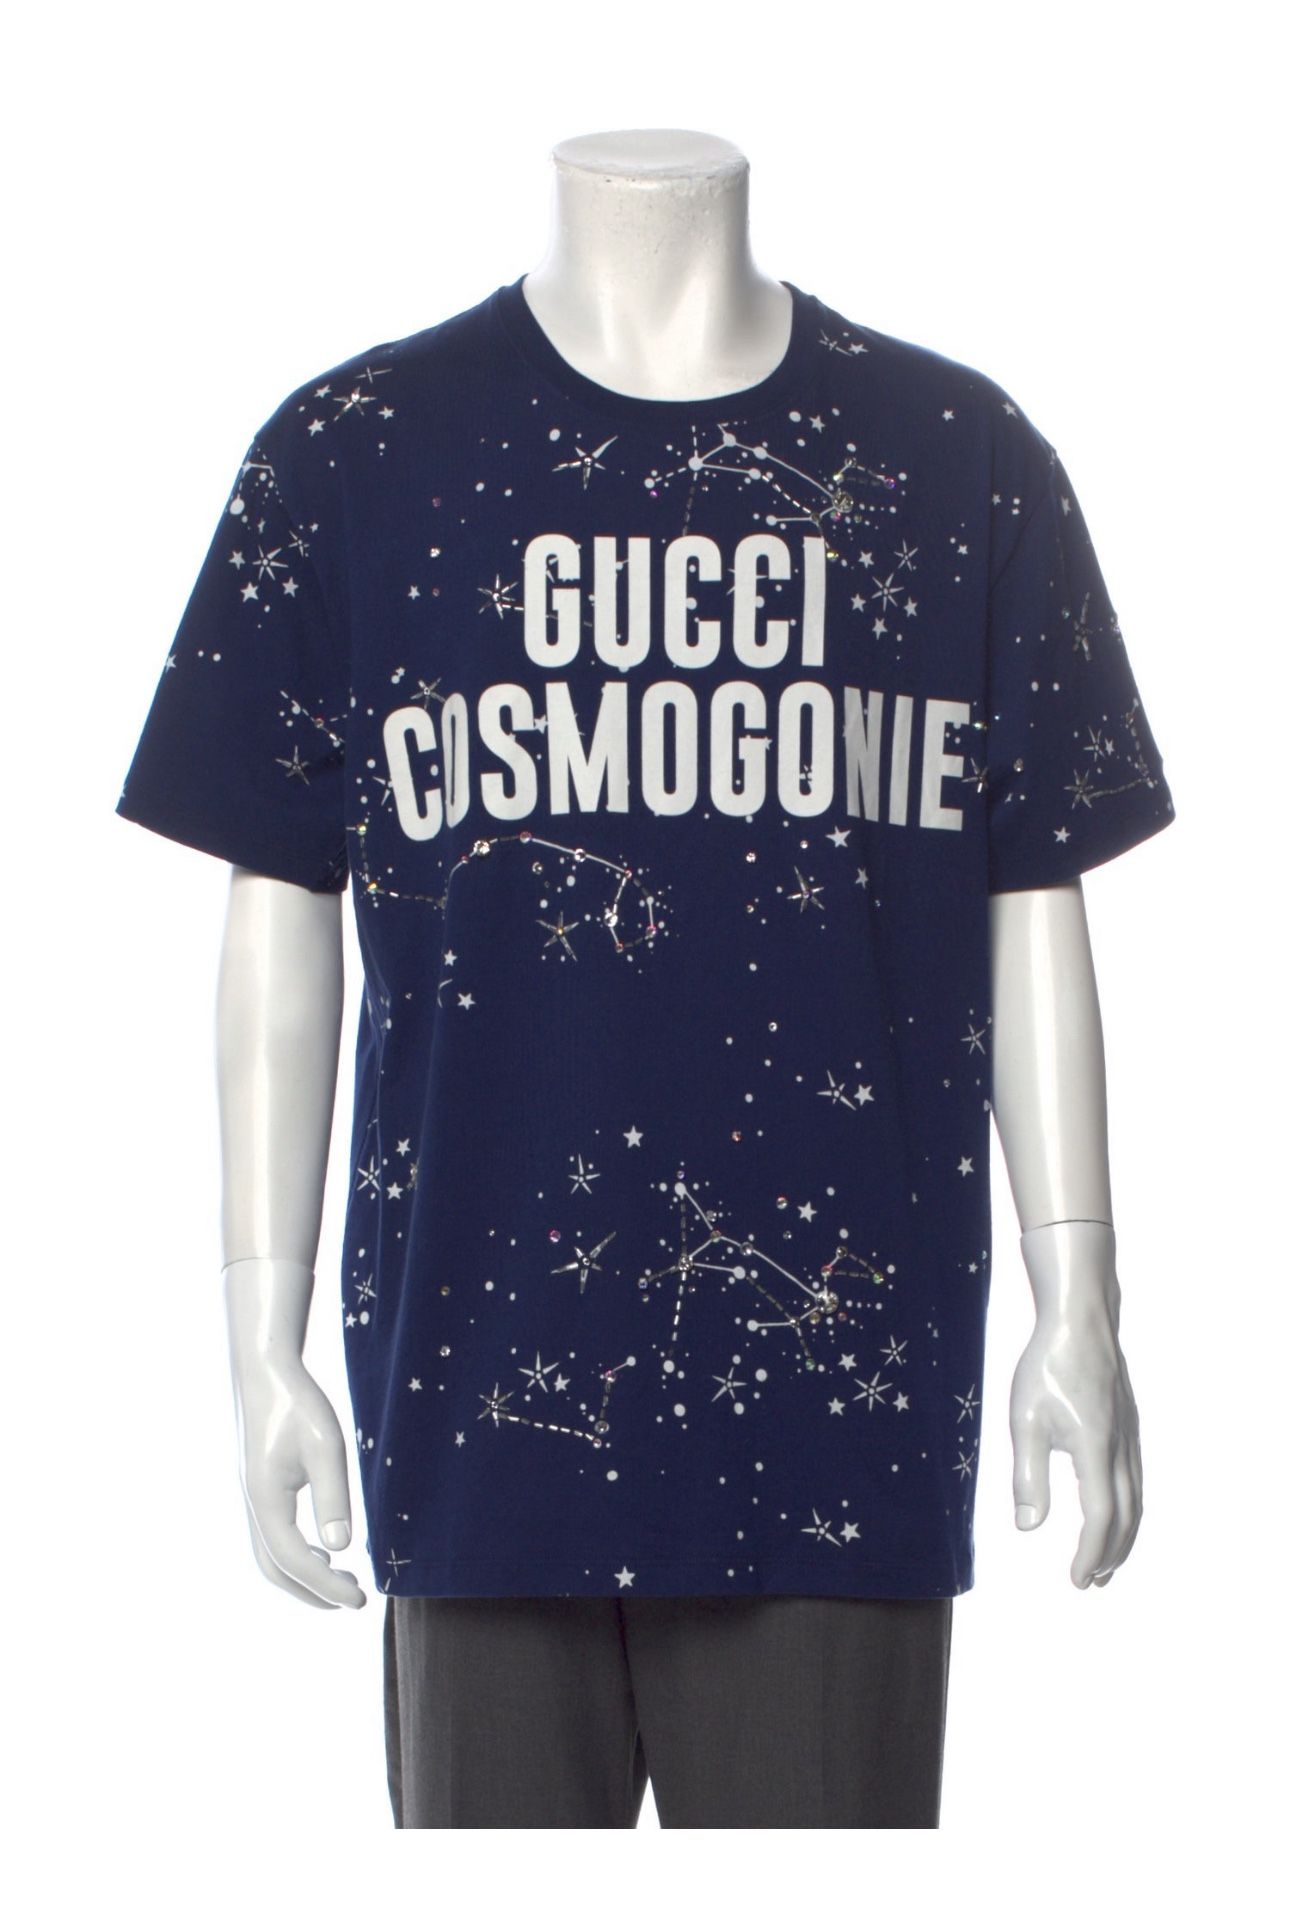 Gucci Men’s Shirt- Like New